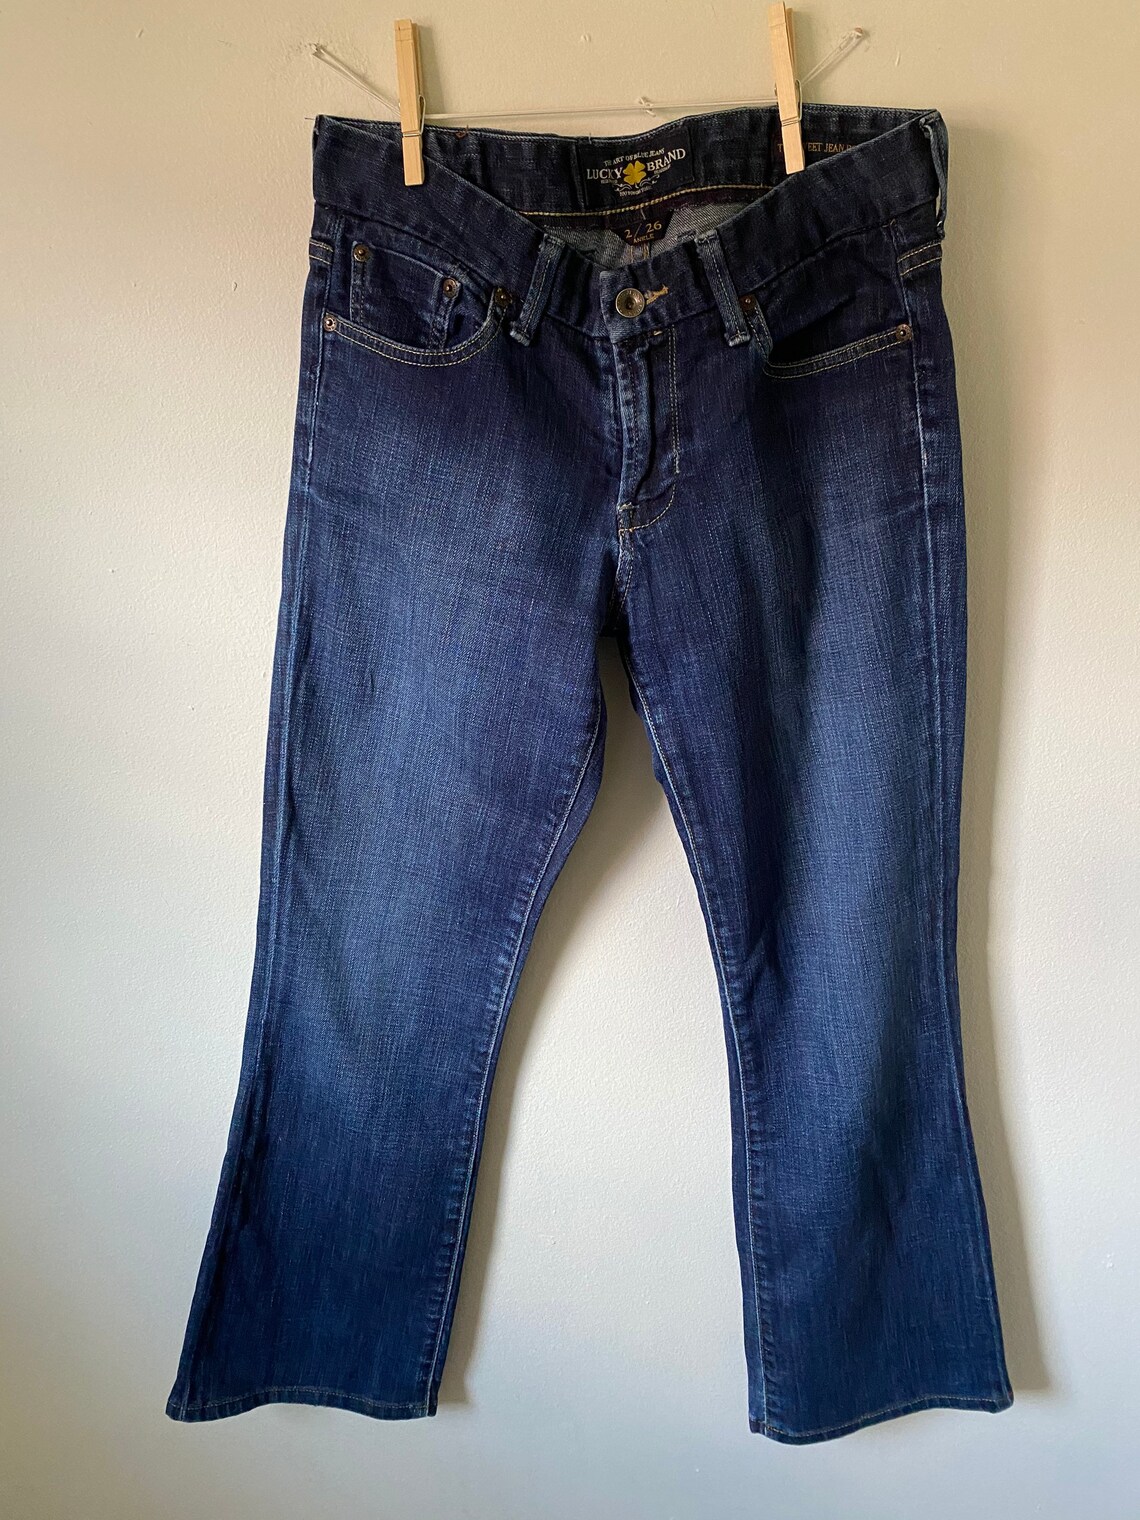 90s VTG LUCKY Mid Rise Jeans 26 | Etsy